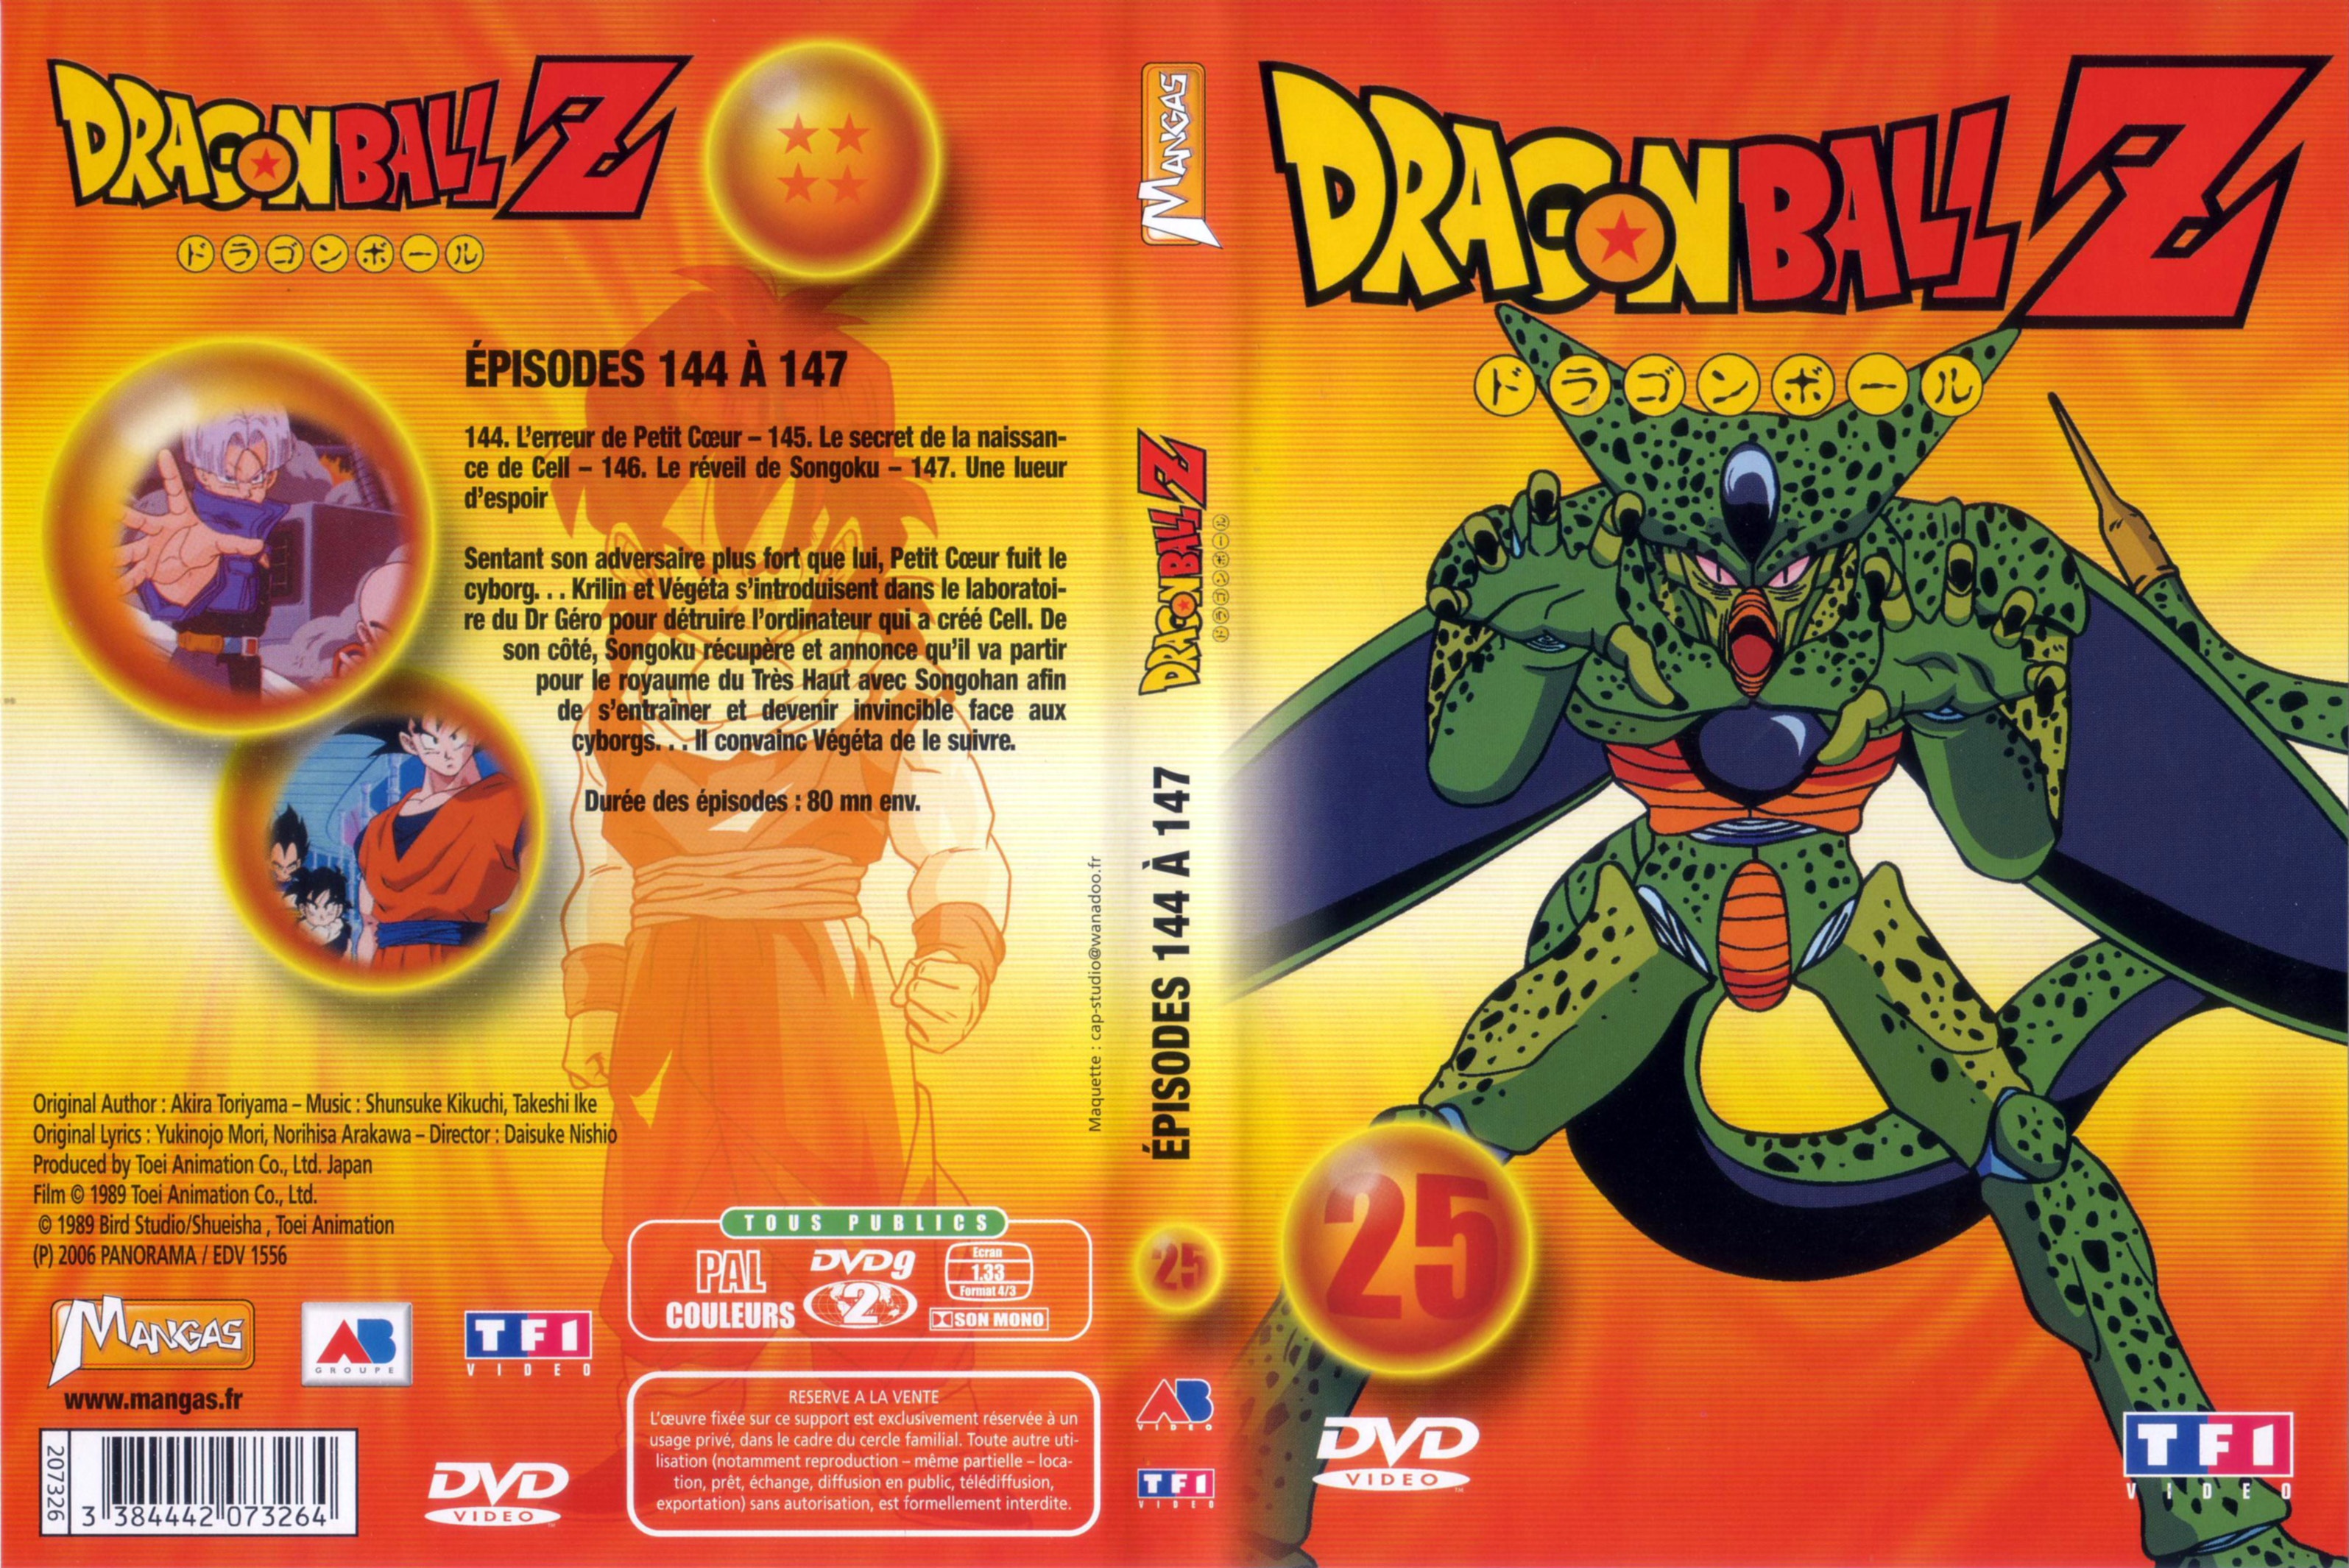 Jaquette DVD Dragon ball Z vol 25